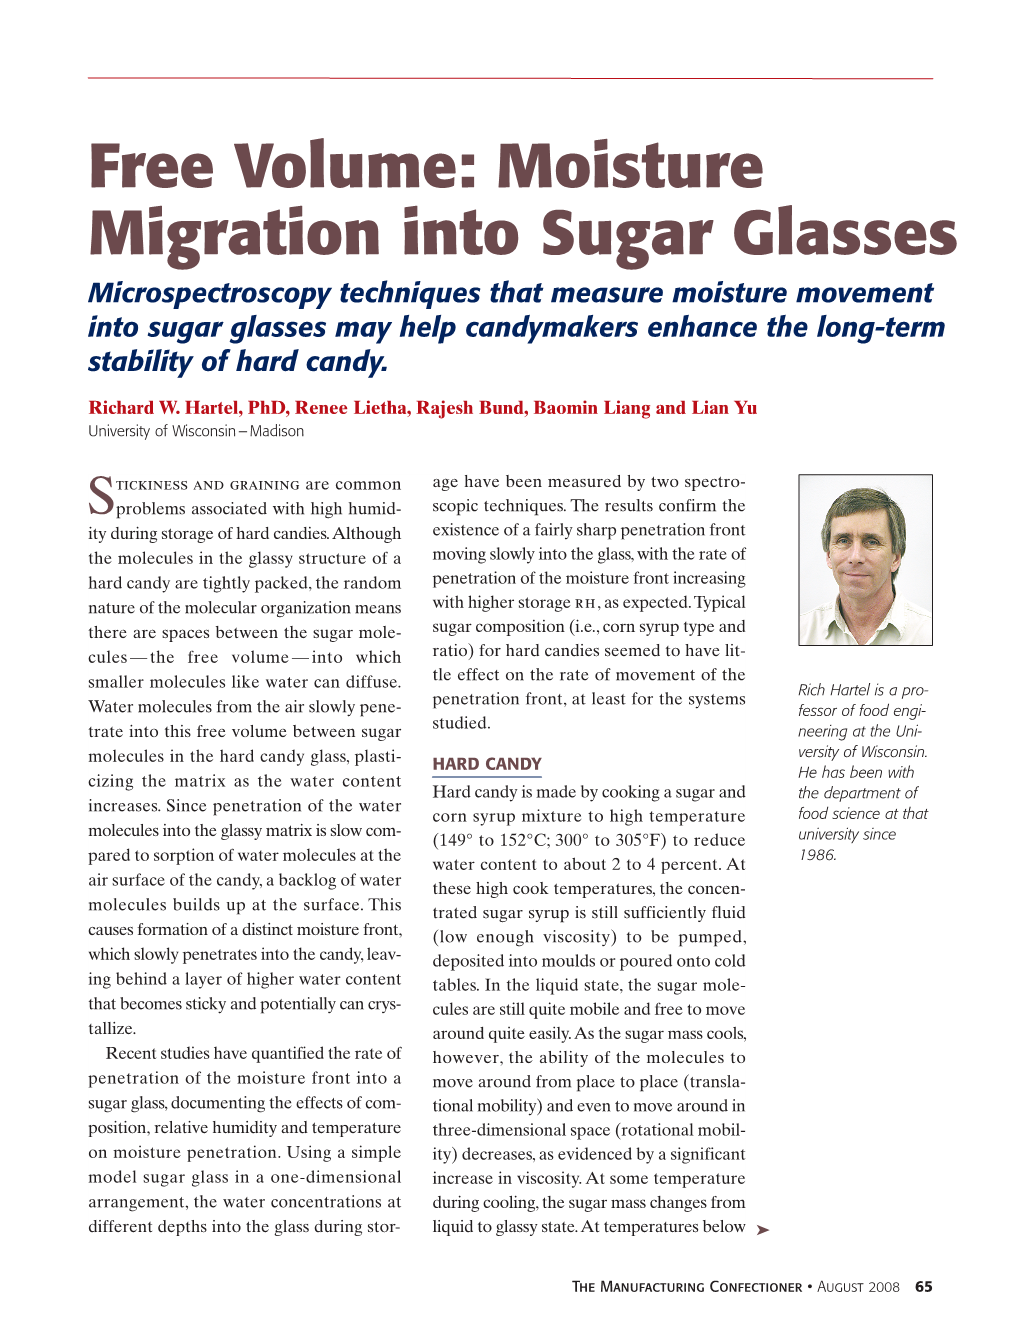 Moisture Migration Into Sugar Glasses